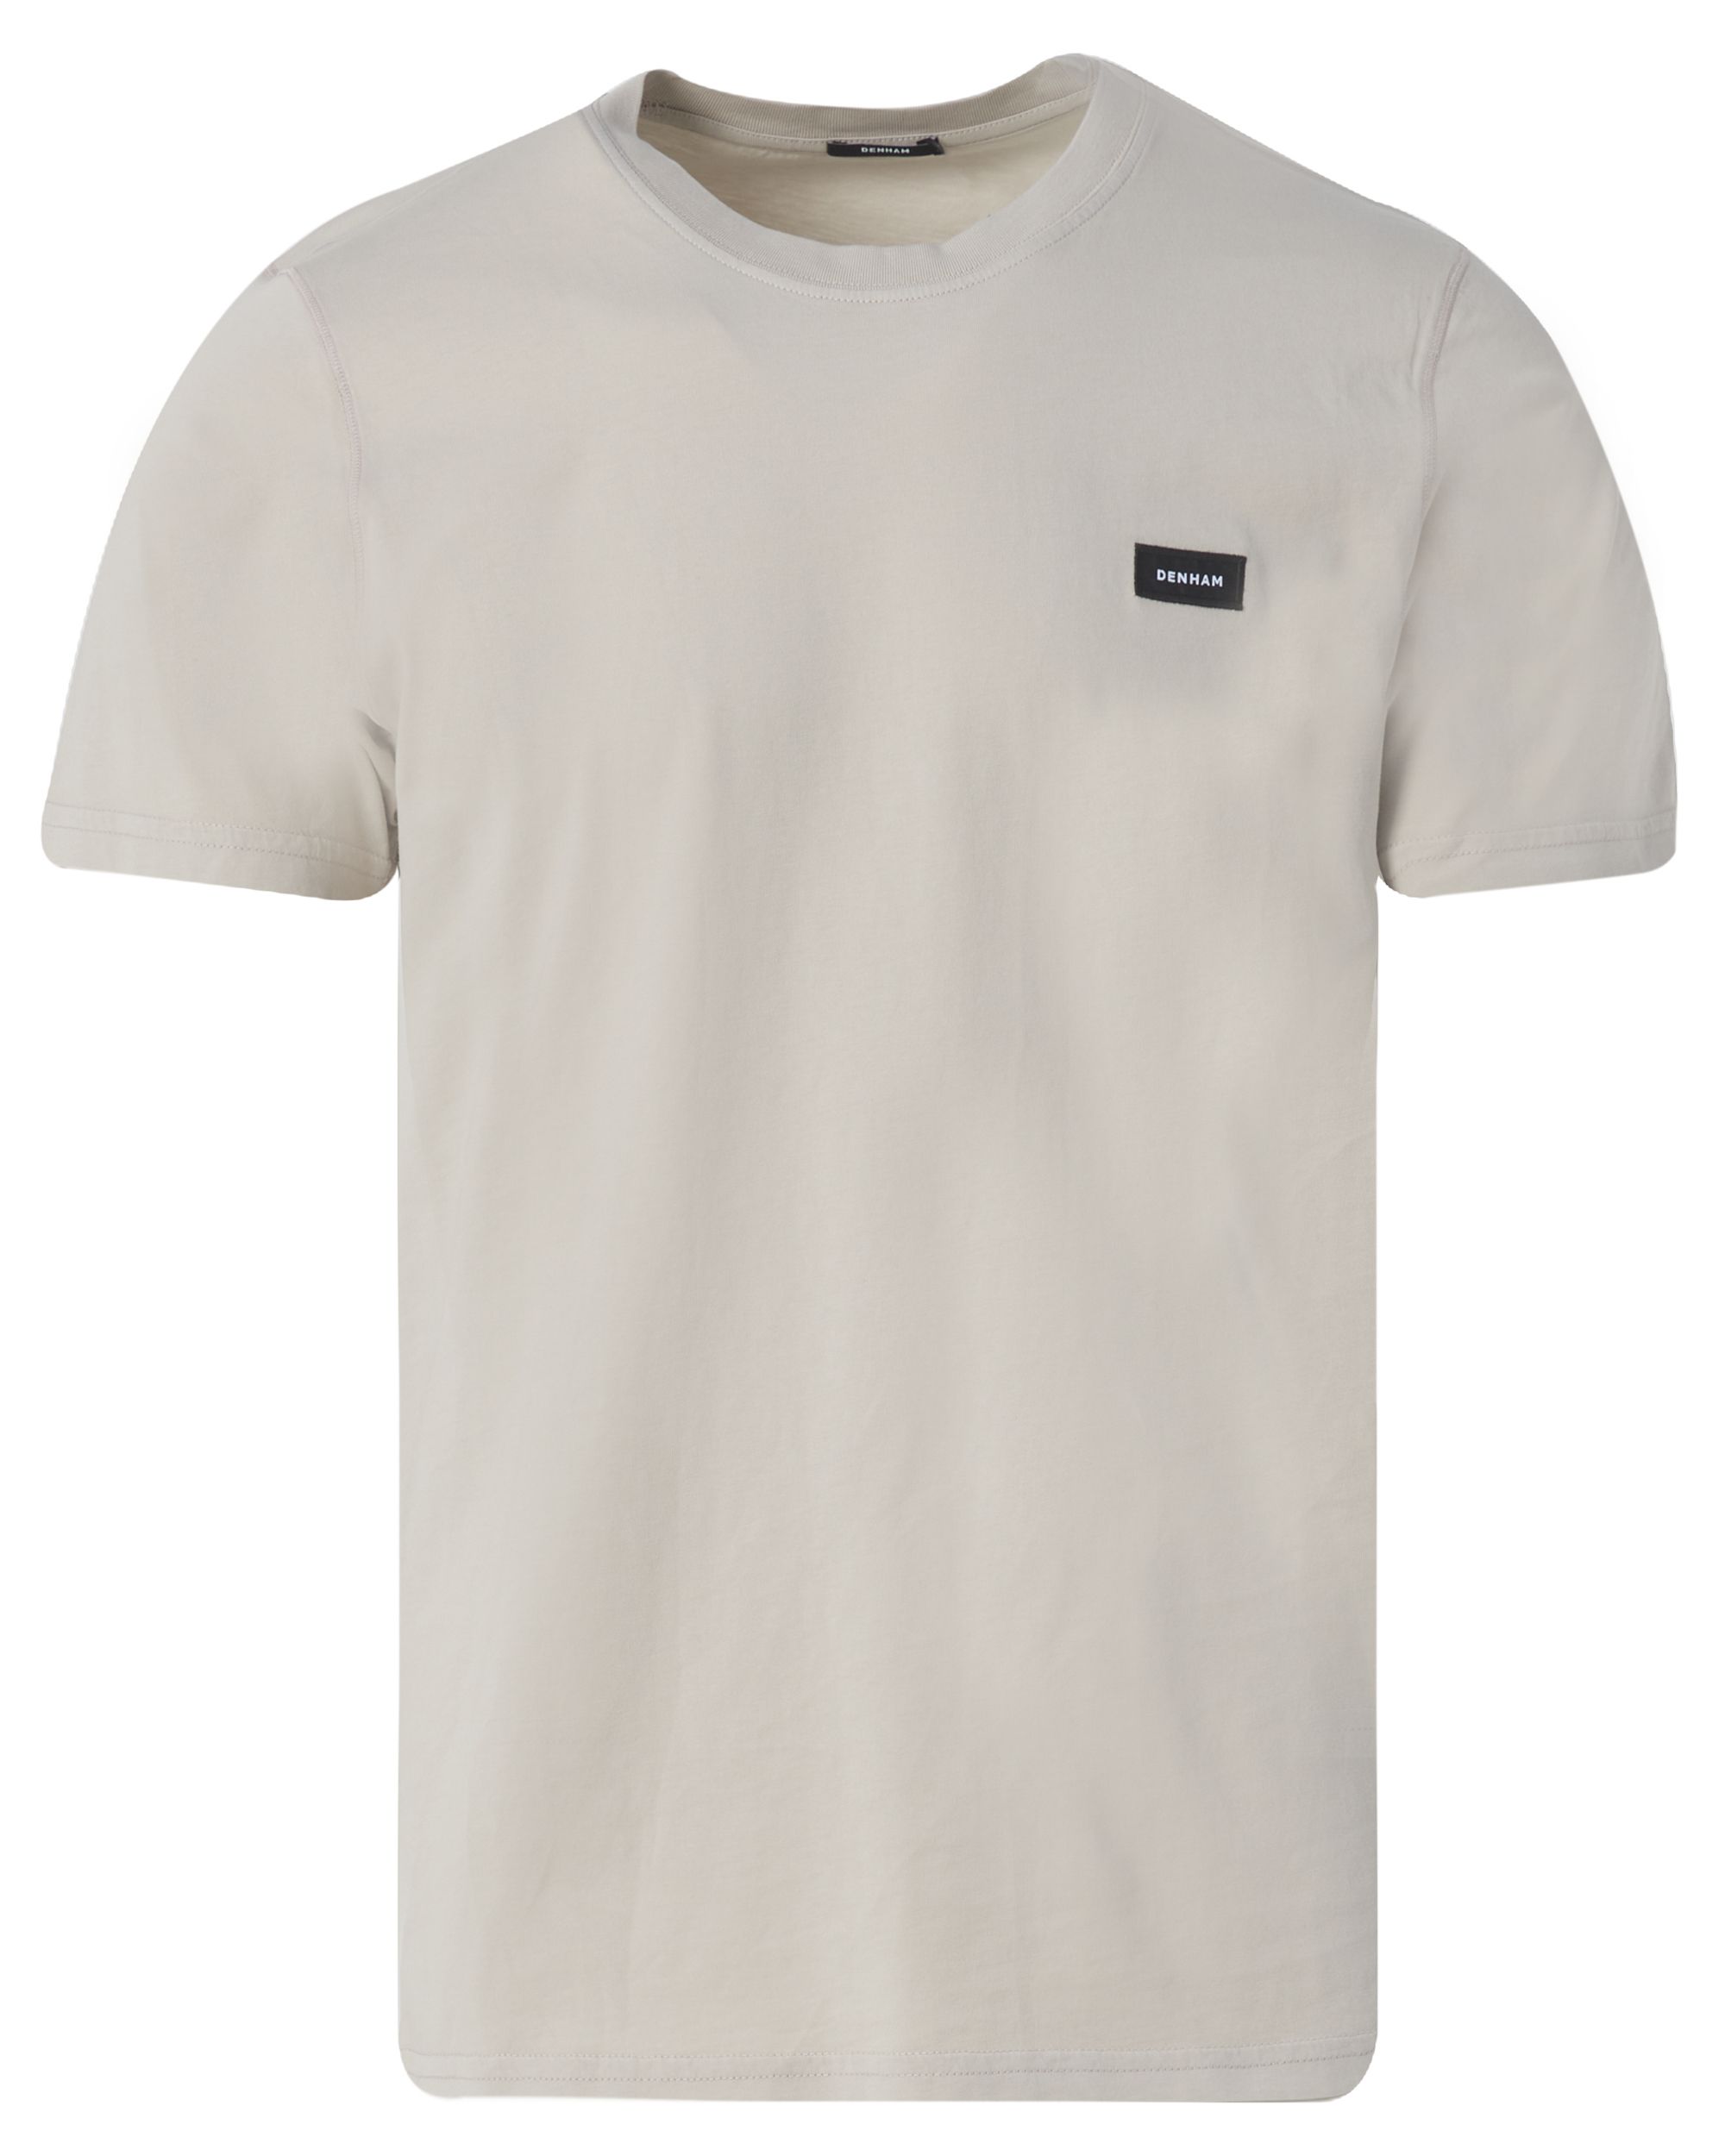 DENHAM Slim T-shirt KM Licht grijs 085179-001-L